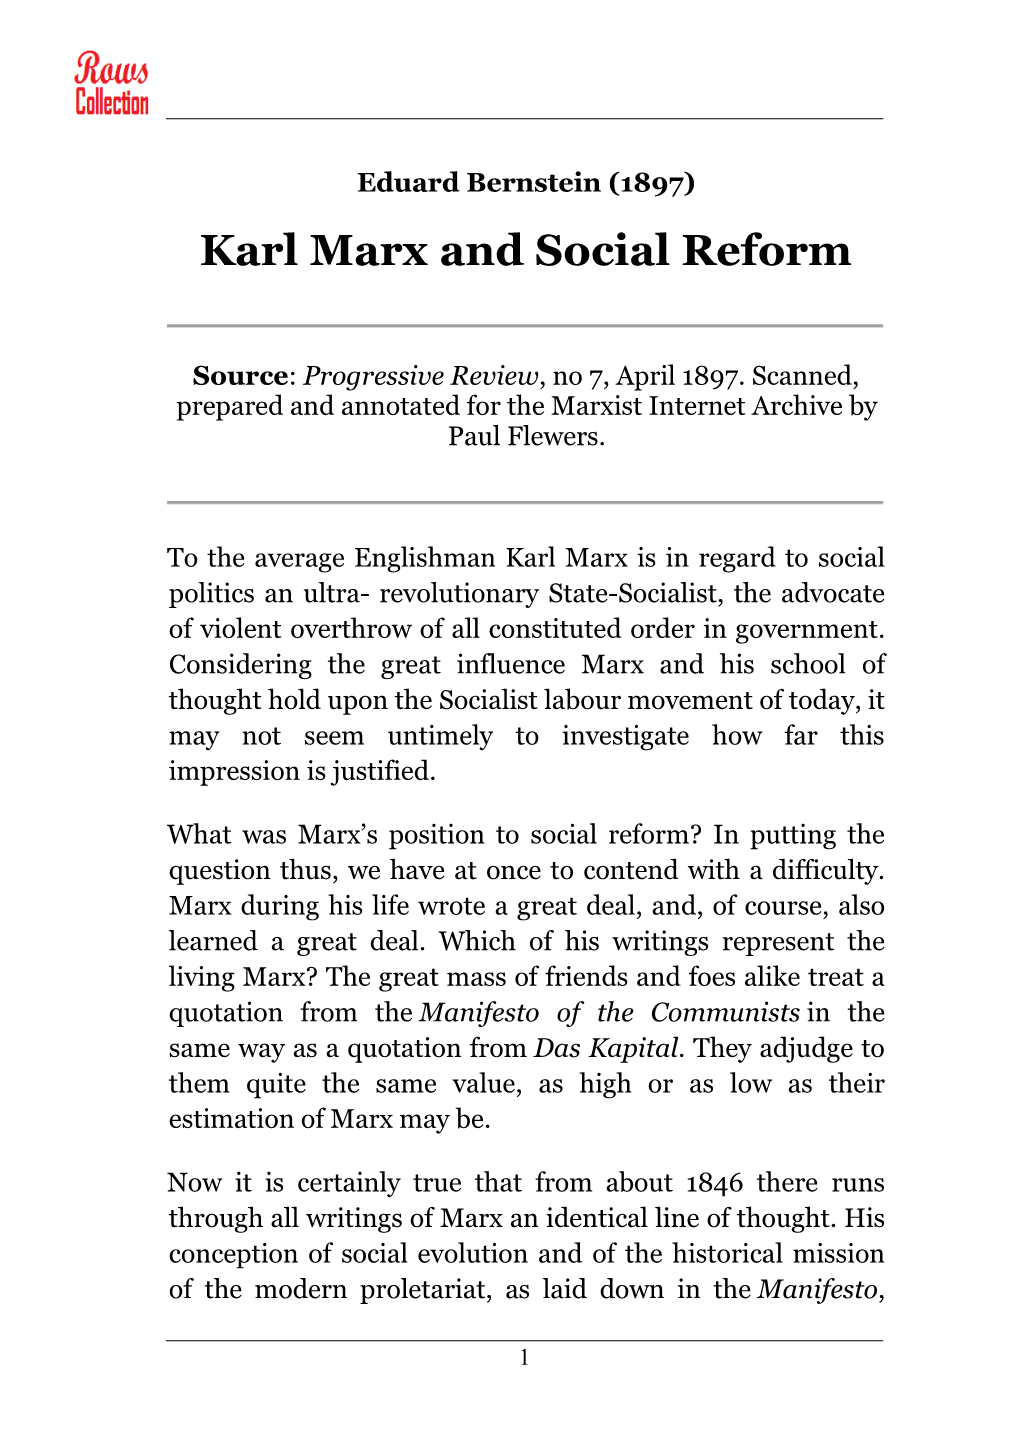 Eduard Bernstein (1897) Karl Marx and Social Reform